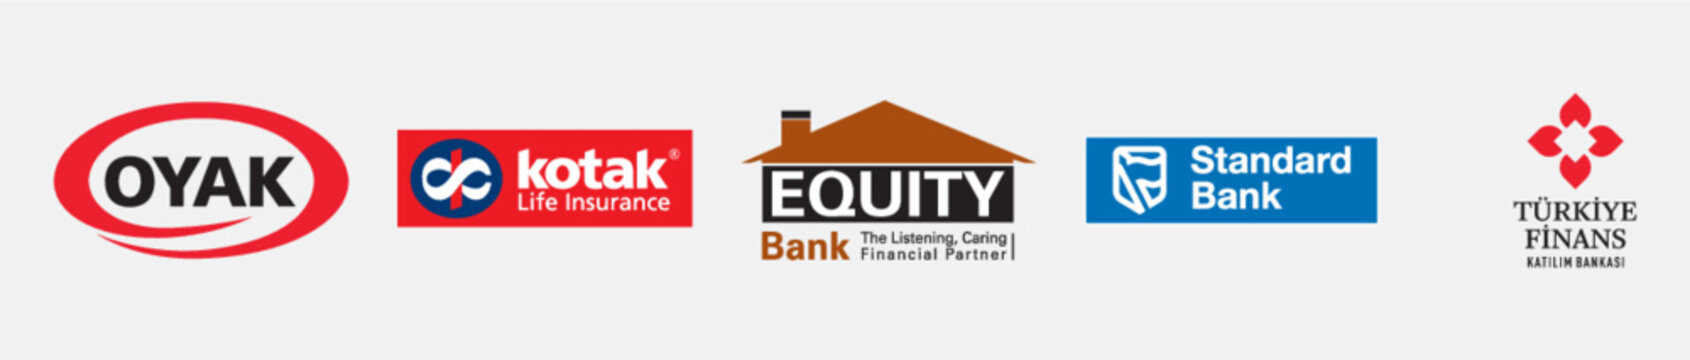 Standard Bank logo, Kotak Life Insurance logo, OYAK Ordu Yardımlaşma Kurumu logo, Equity Bank logo, Türkiye Finans logo, Finance logo, Set of popular logos printed on paper.